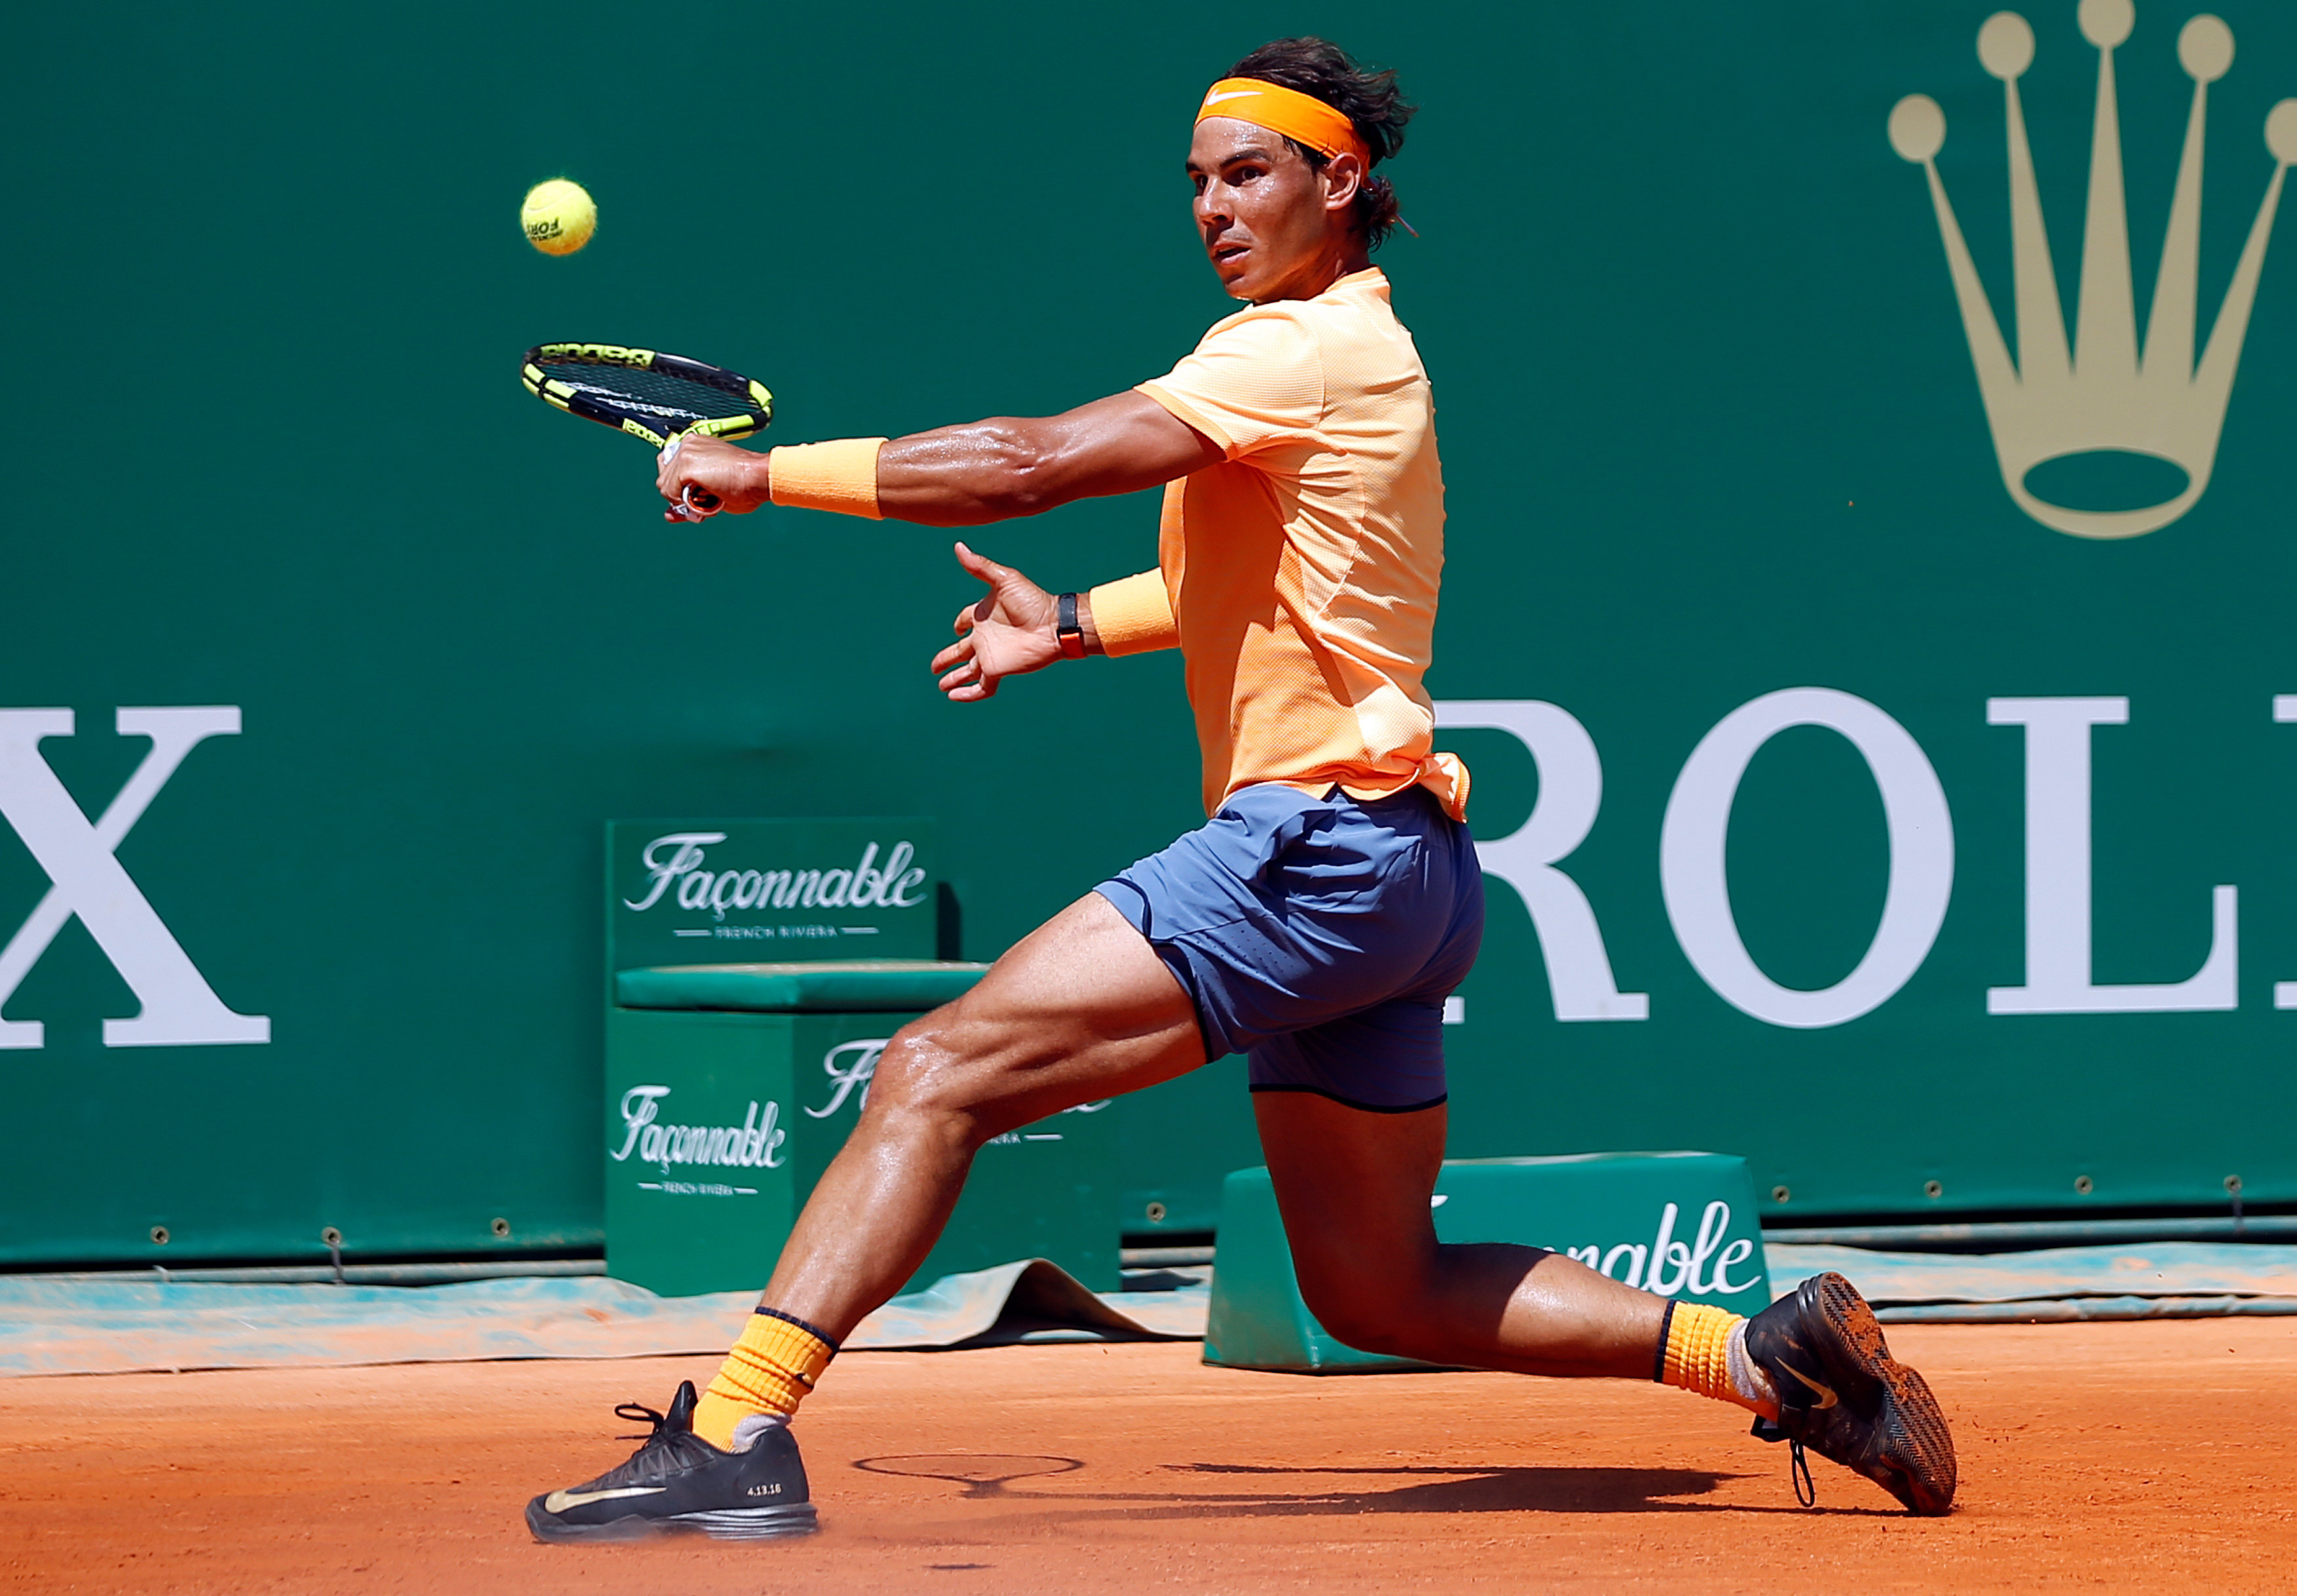 Monte Carlo R3 When does Rafael Nadal play against Dominic Thiem?